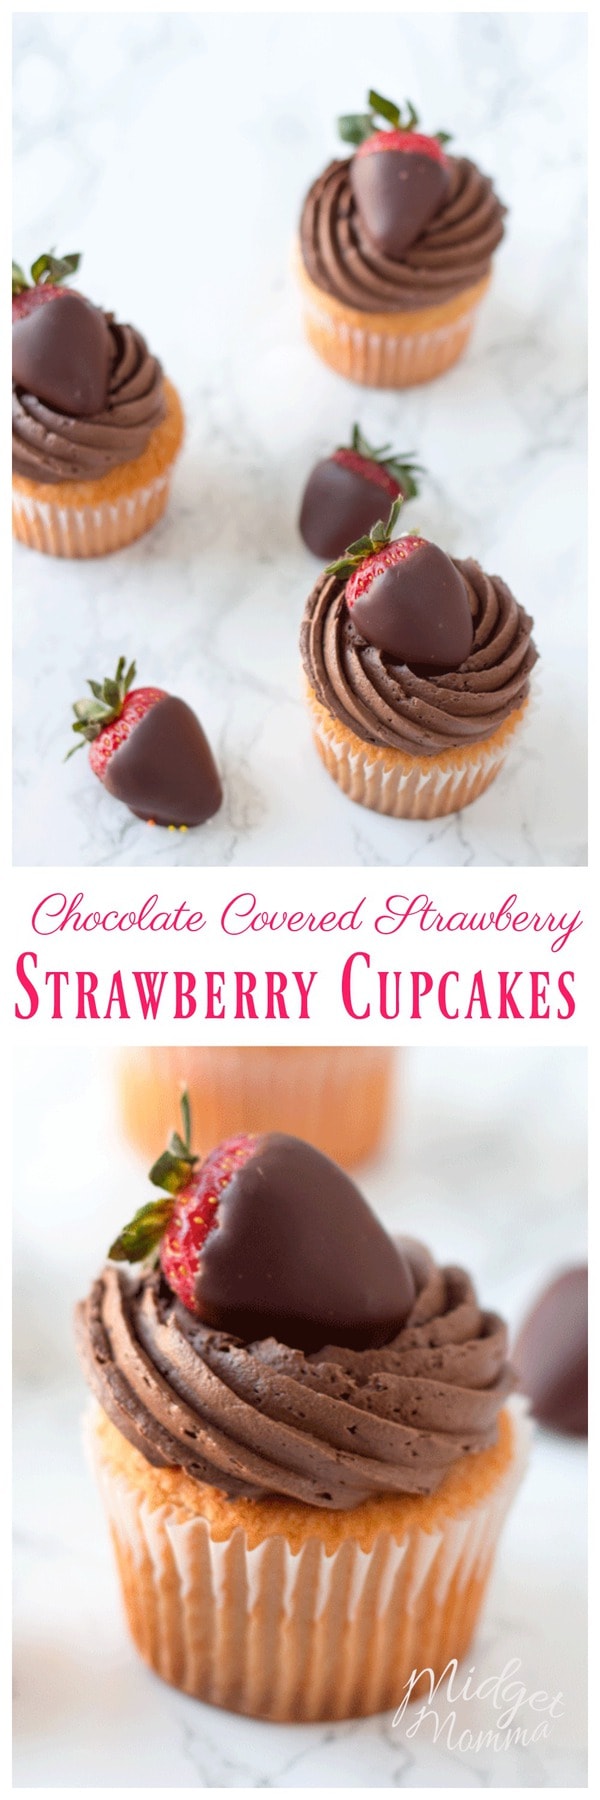 Amazing Chocolate Covered Strawberry Cupcakes